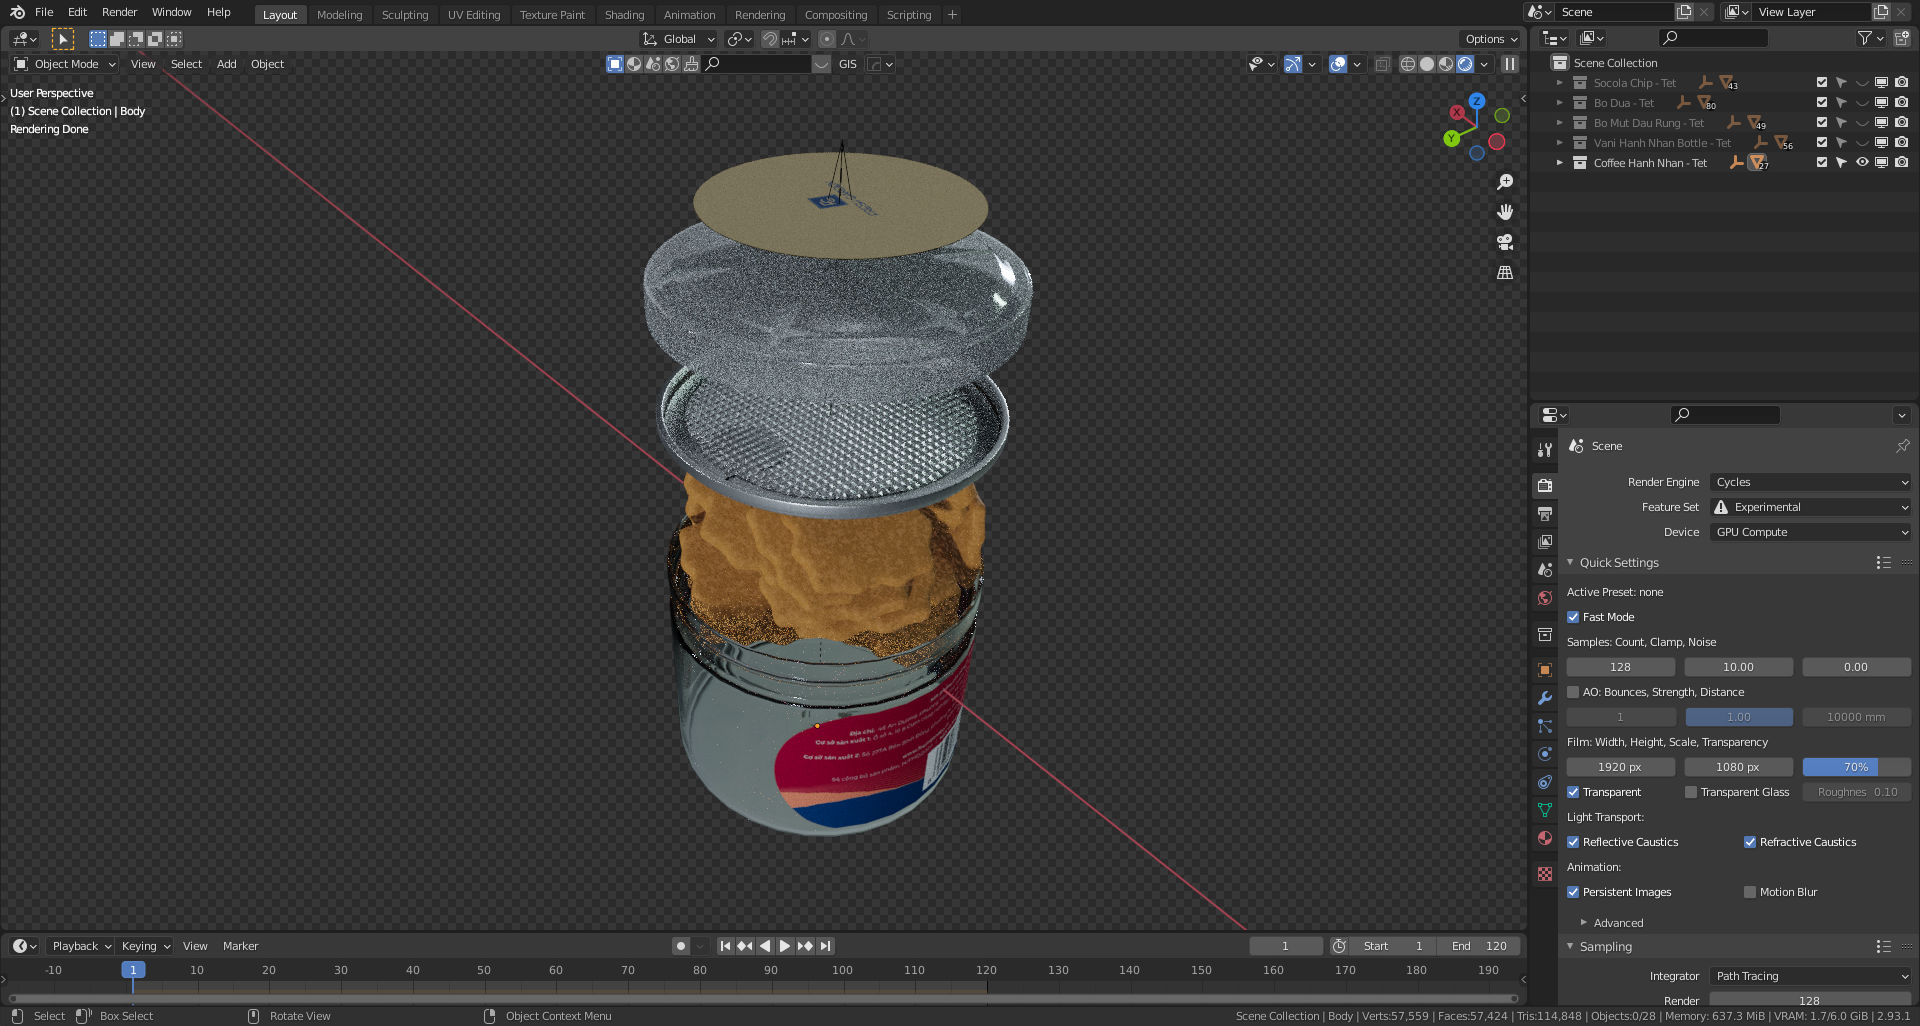 Screenshot 2021 08 03 214636 - Fresh Garden - Cookie "Tet" 3D product visualization - Sonny Nguyen